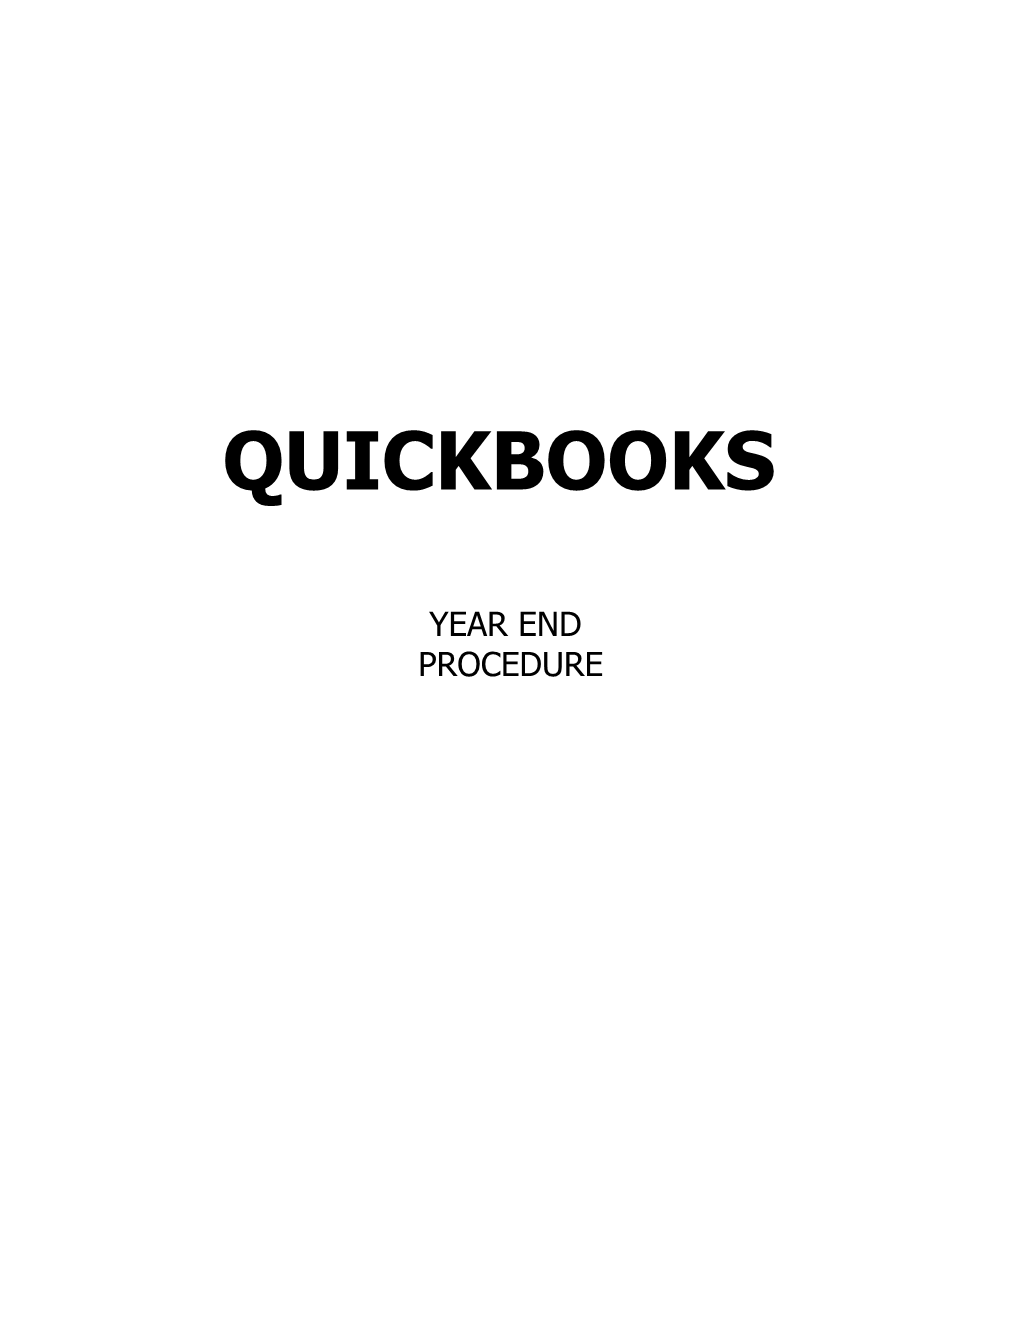 Set-Up of New Quickbooks Company (With Take on Balances)